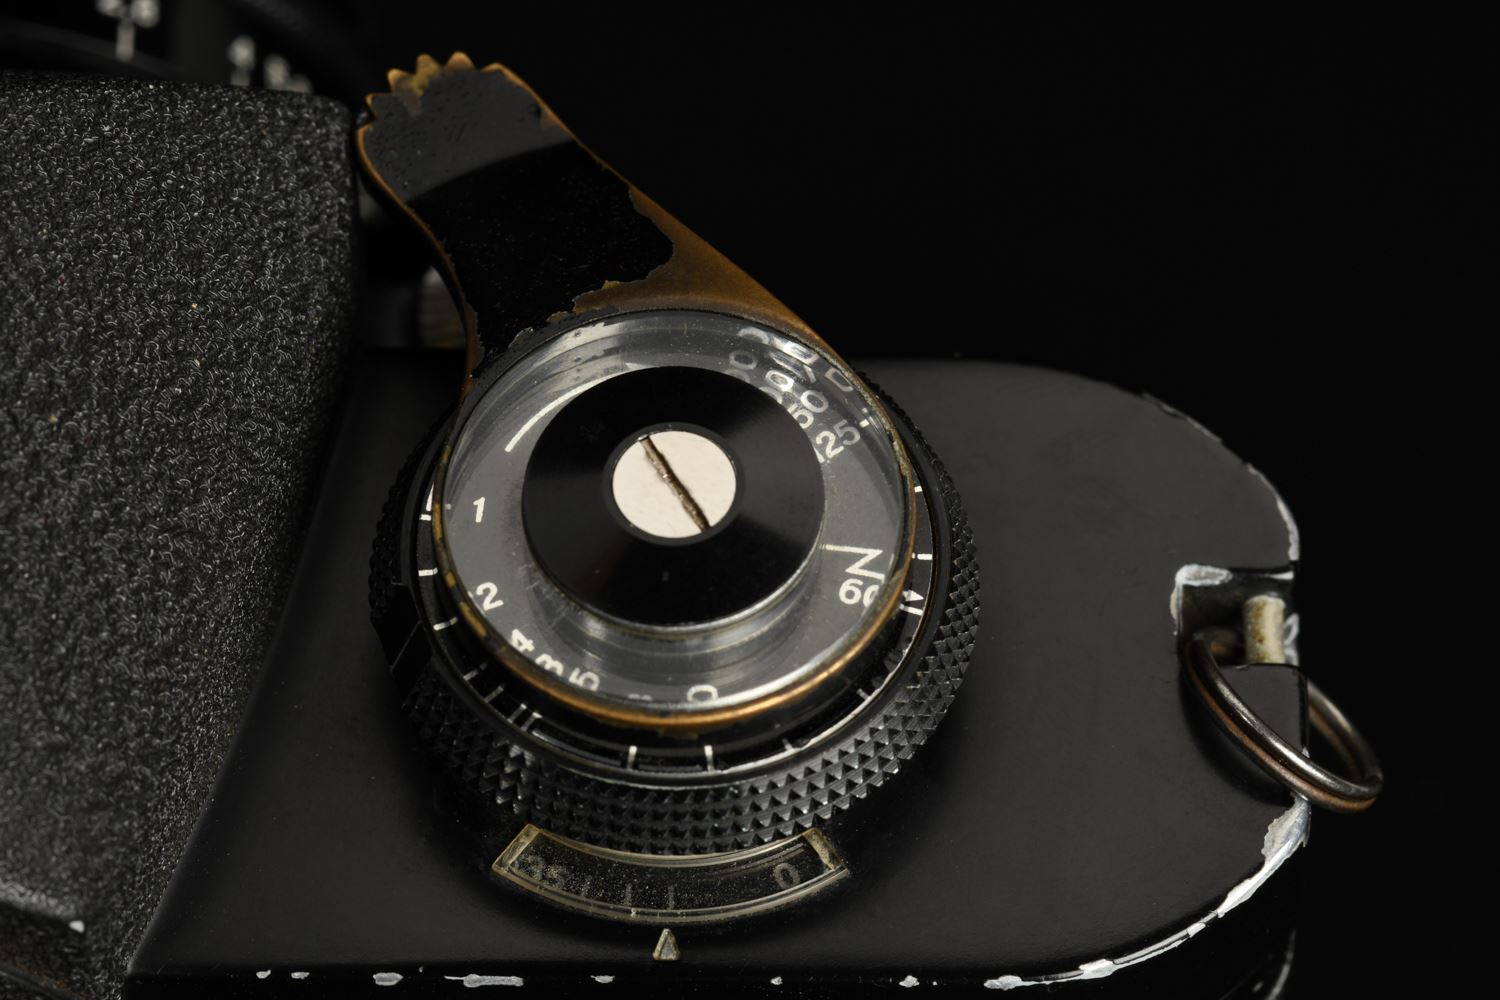 Picture of Alpa Reflex 6c Set with Kern Macro-Switar 50mm f/1.8 All Black